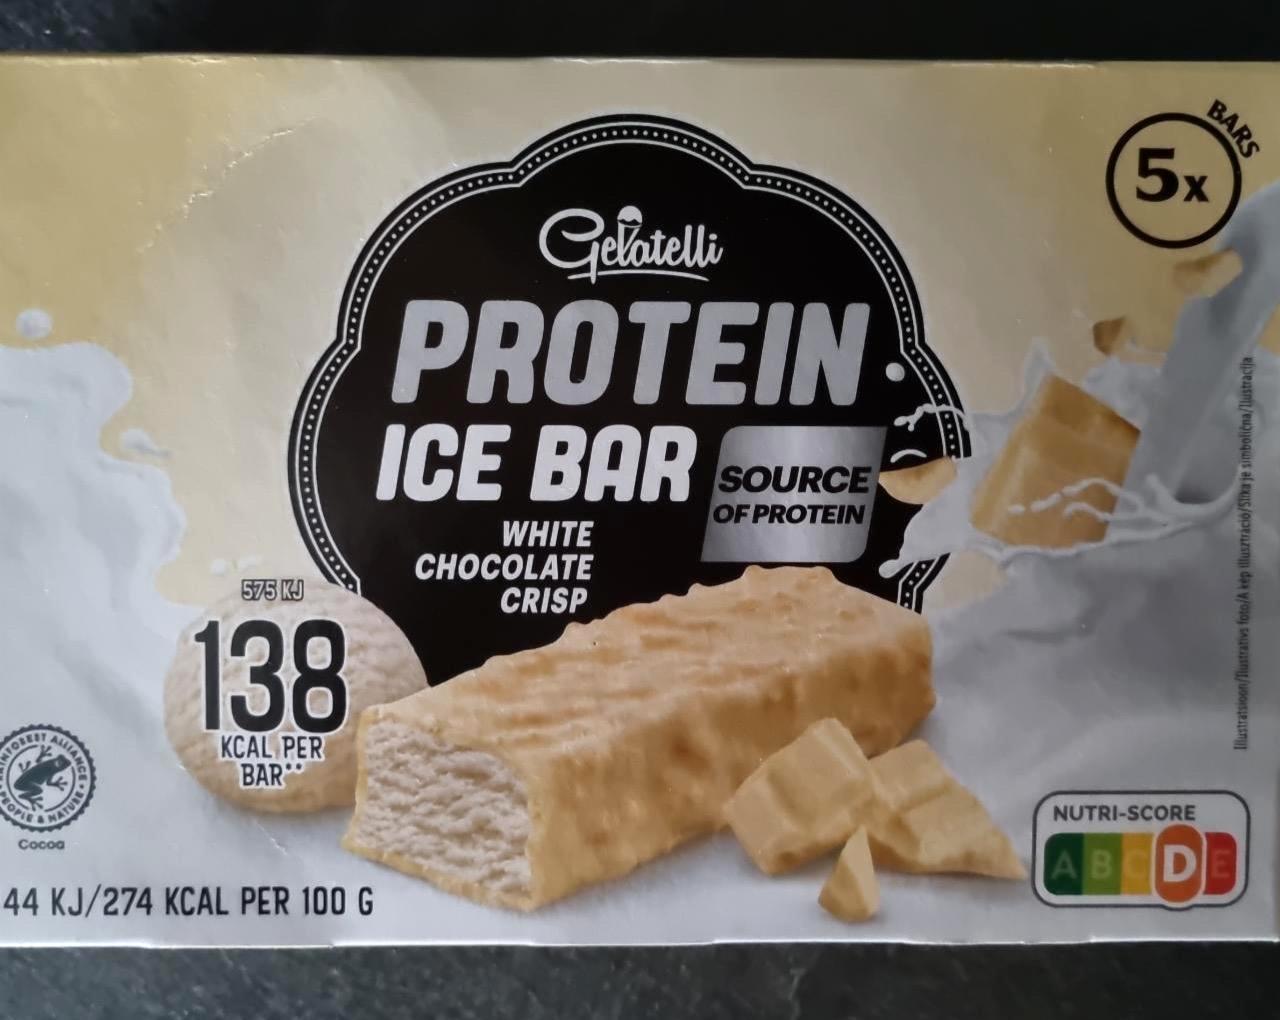 Képek - Protein Ice Bar White Choclate Crisp Gelatelli